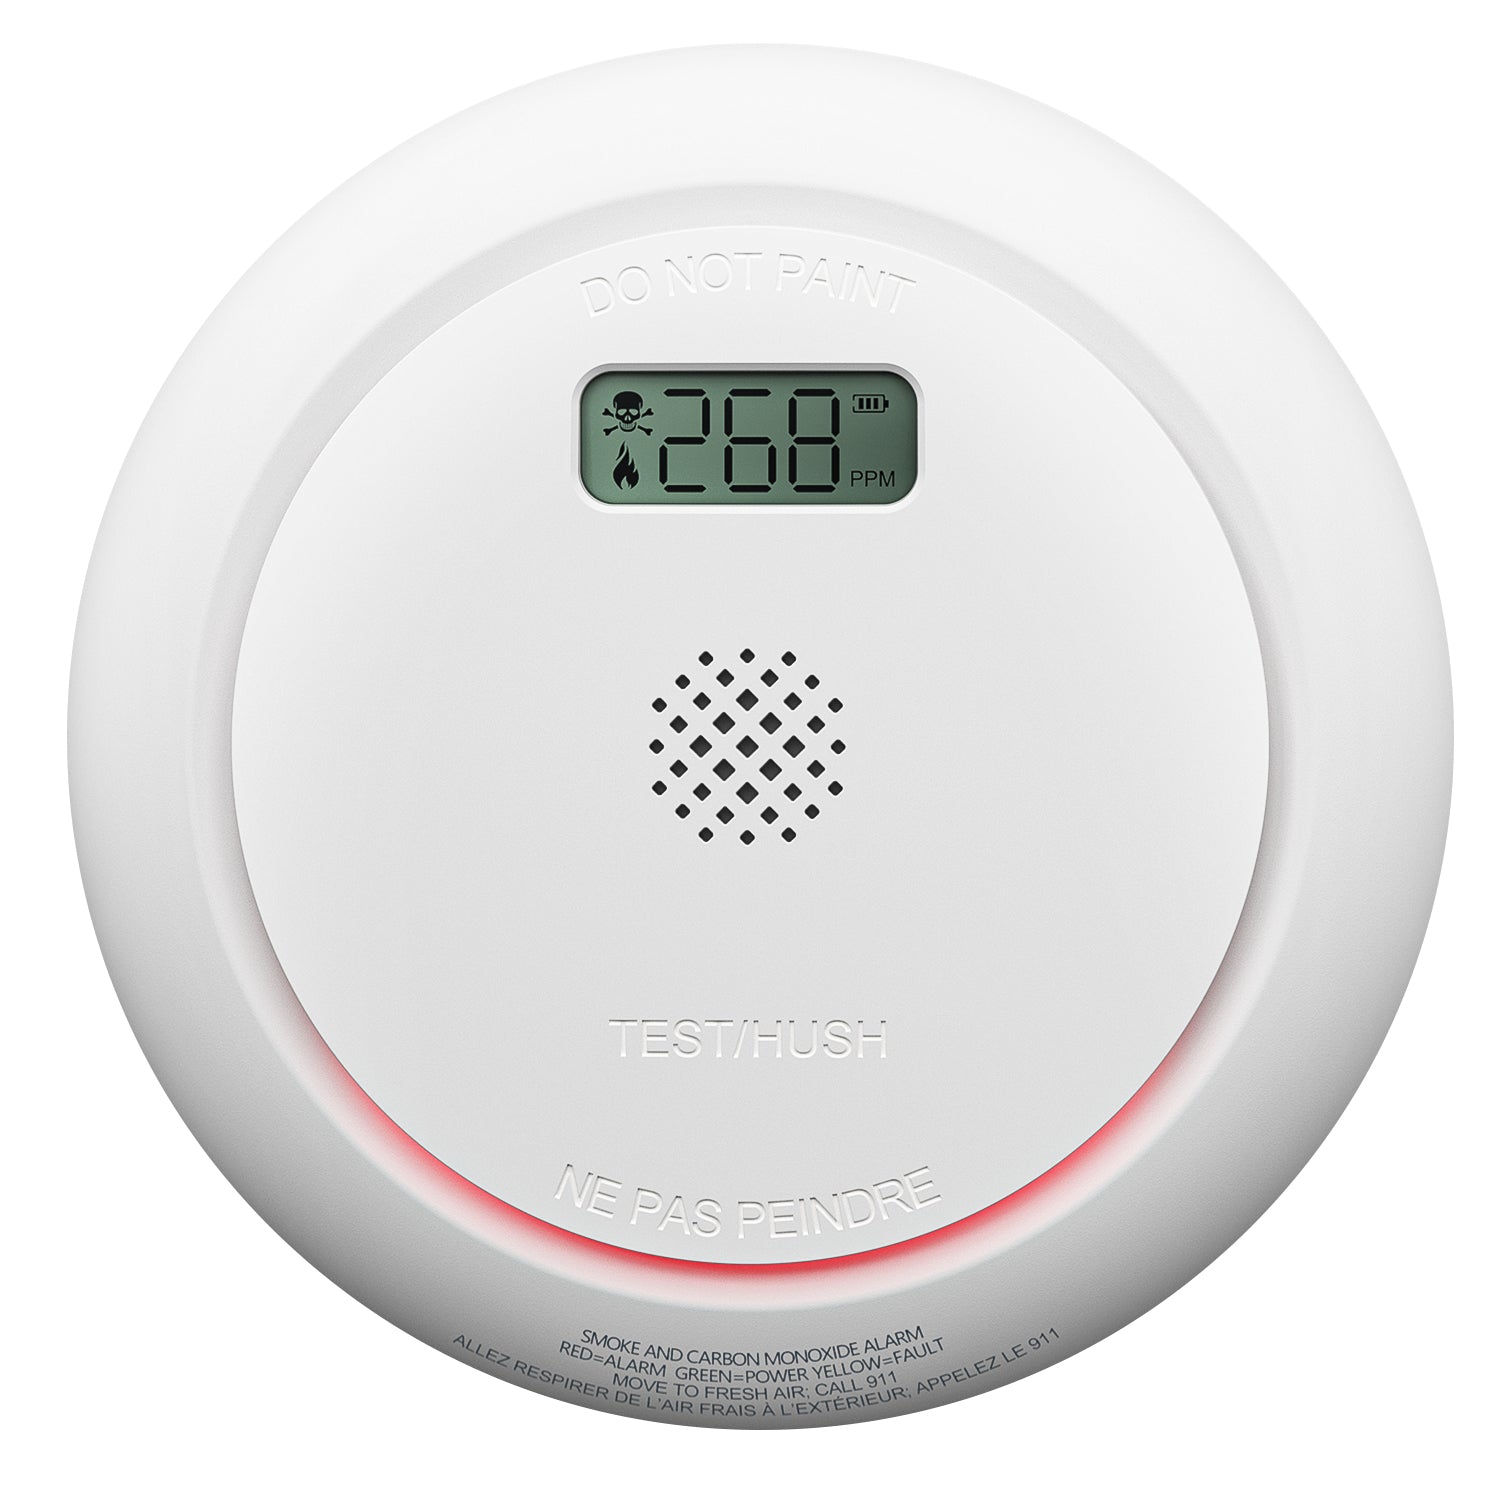 GS888W Smart WiFi Combo Smoke & Carbon Monoxide Alarm